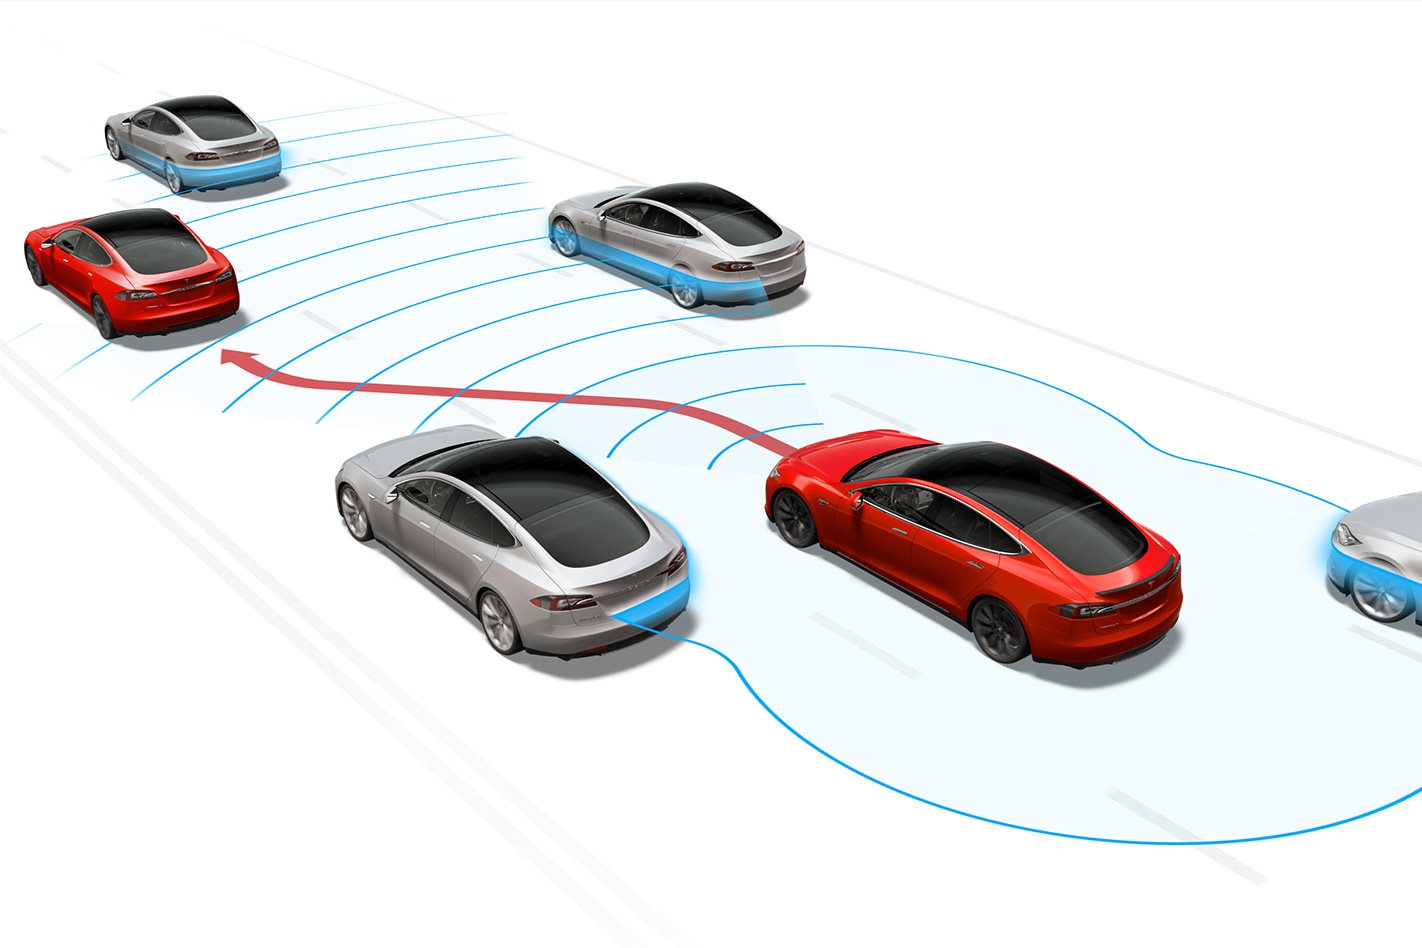 adaptive cruise control system for autonomous vehicles